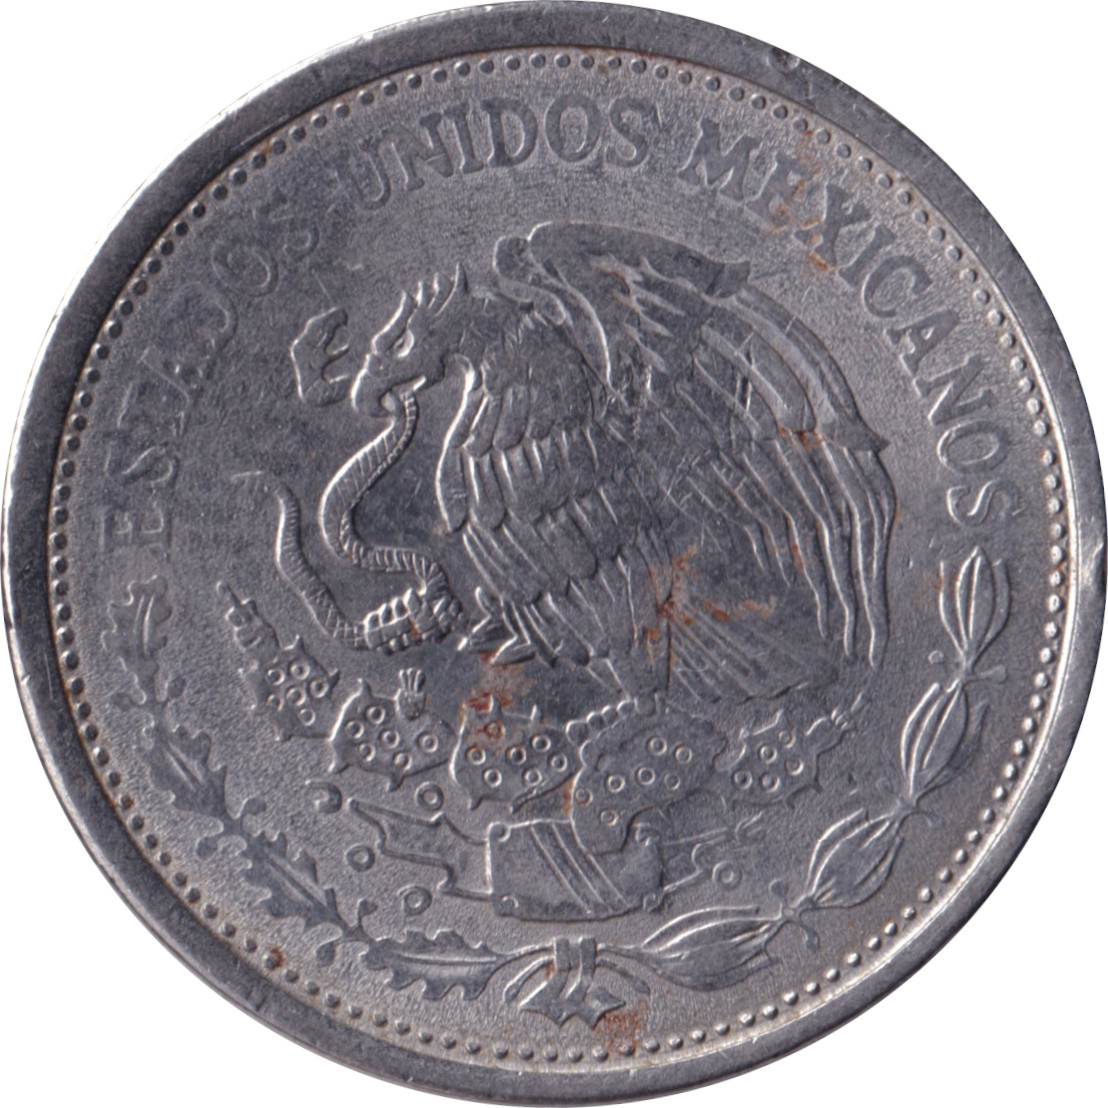 50 pesos - Benito Juarez